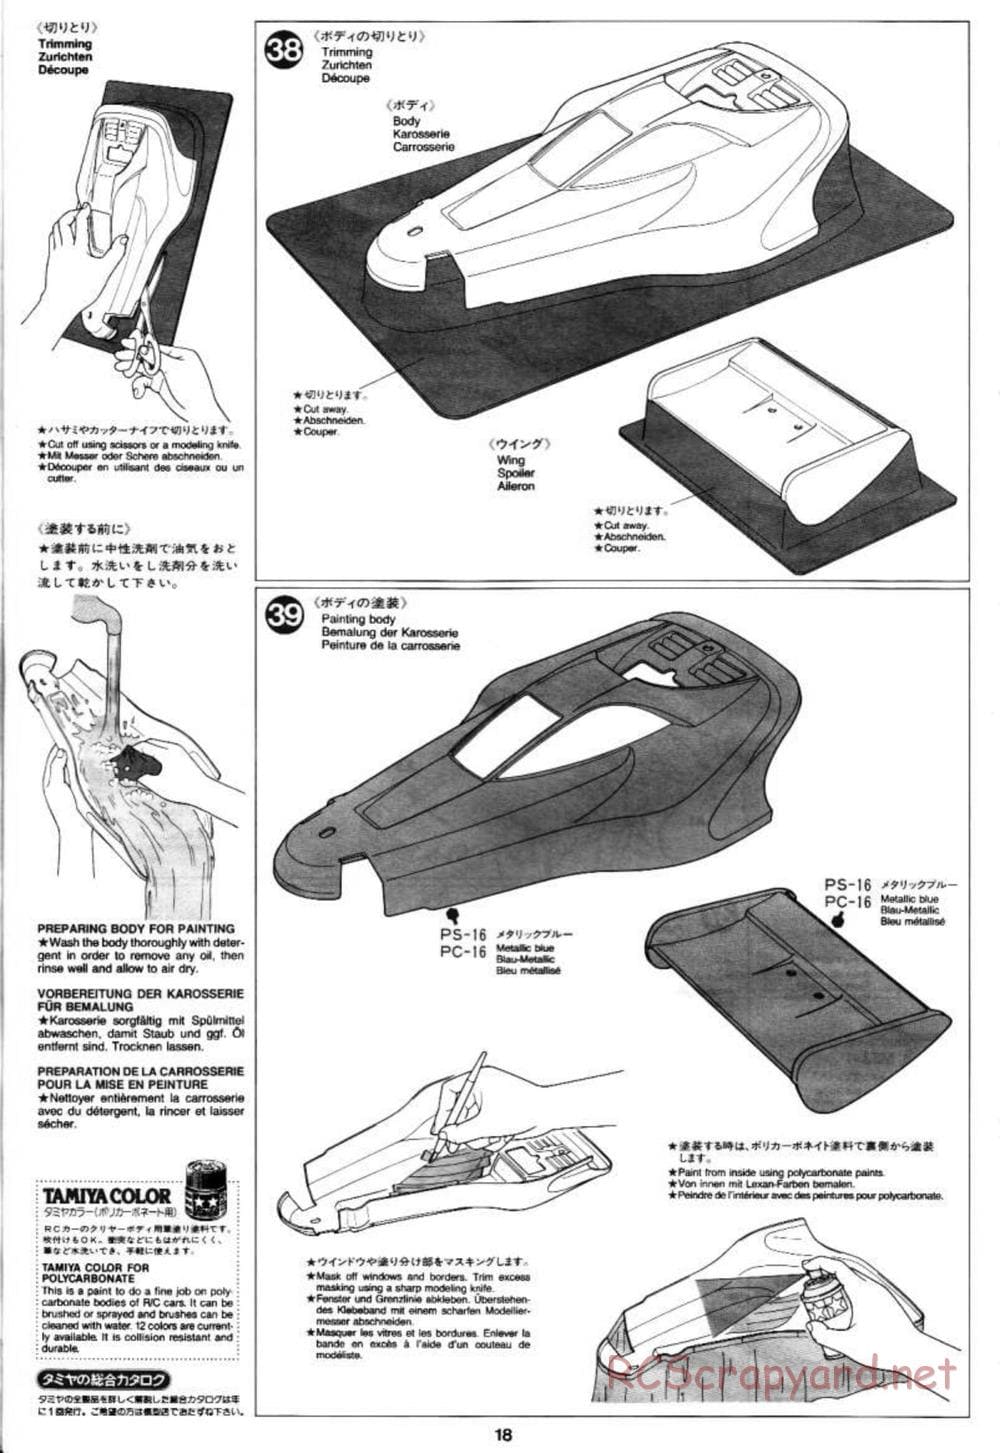 Tamiya - Blazing Star Chassis - Manual - Page 18